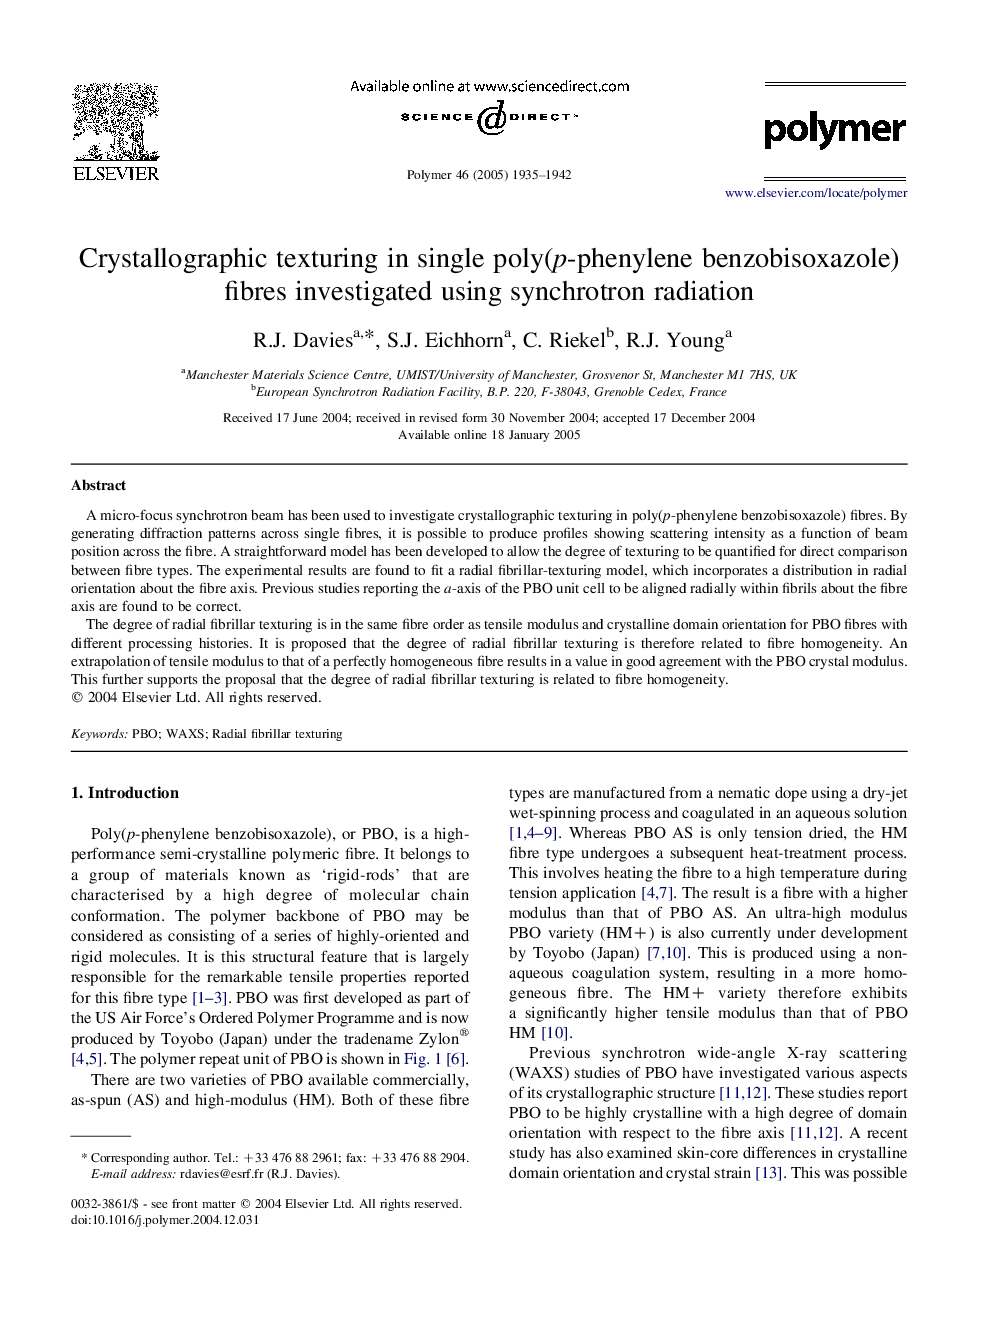 Crystallographic texturing in single poly(p-phenylene benzobisoxazole) fibres investigated using synchrotron radiation